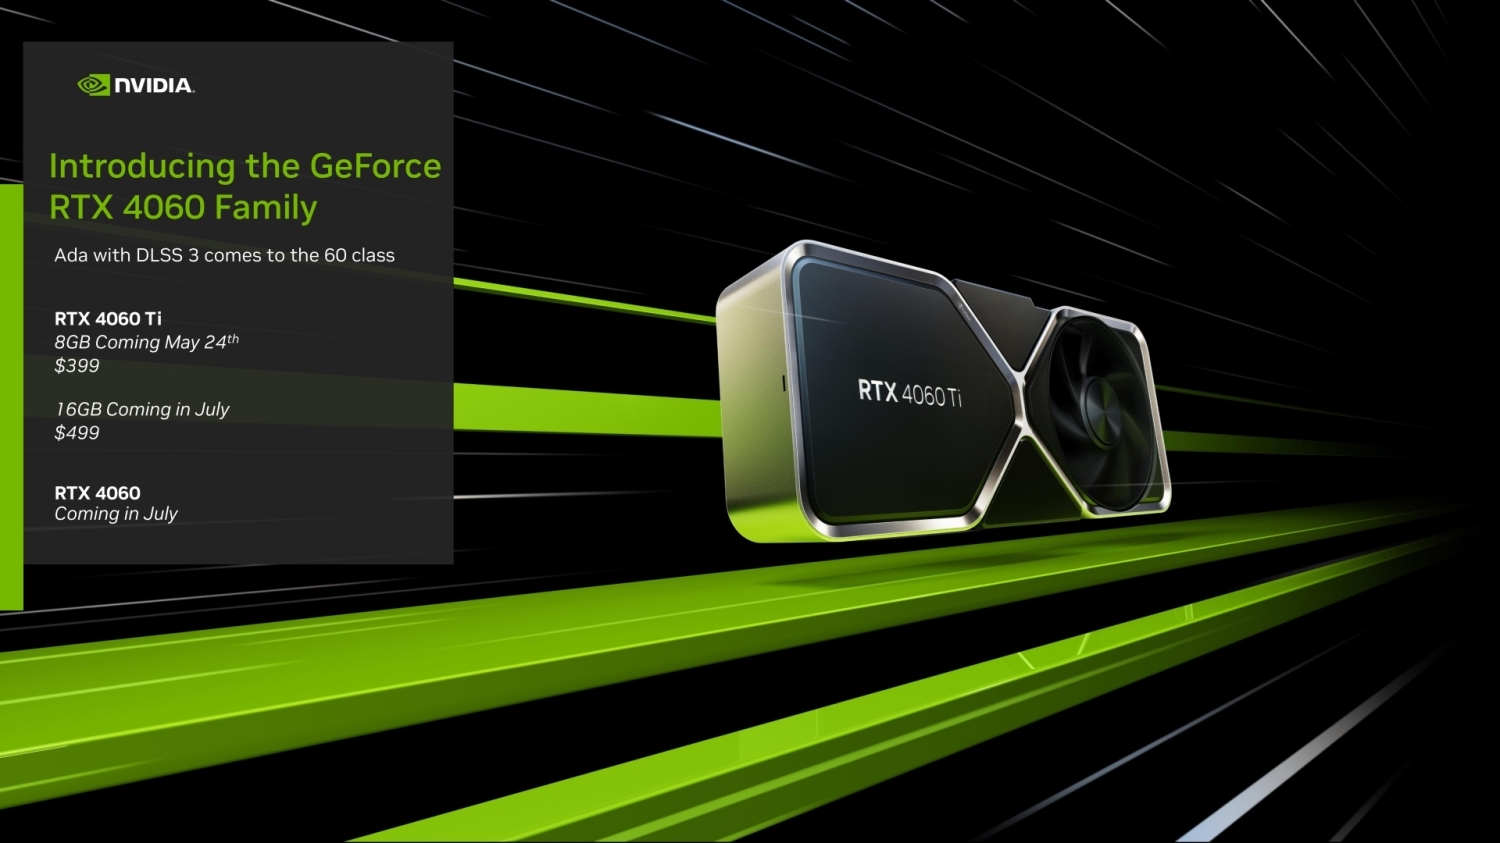 TweakTown Enlarged Image - The GeForce RTX 4060 Family, image credit: NVIDIA.